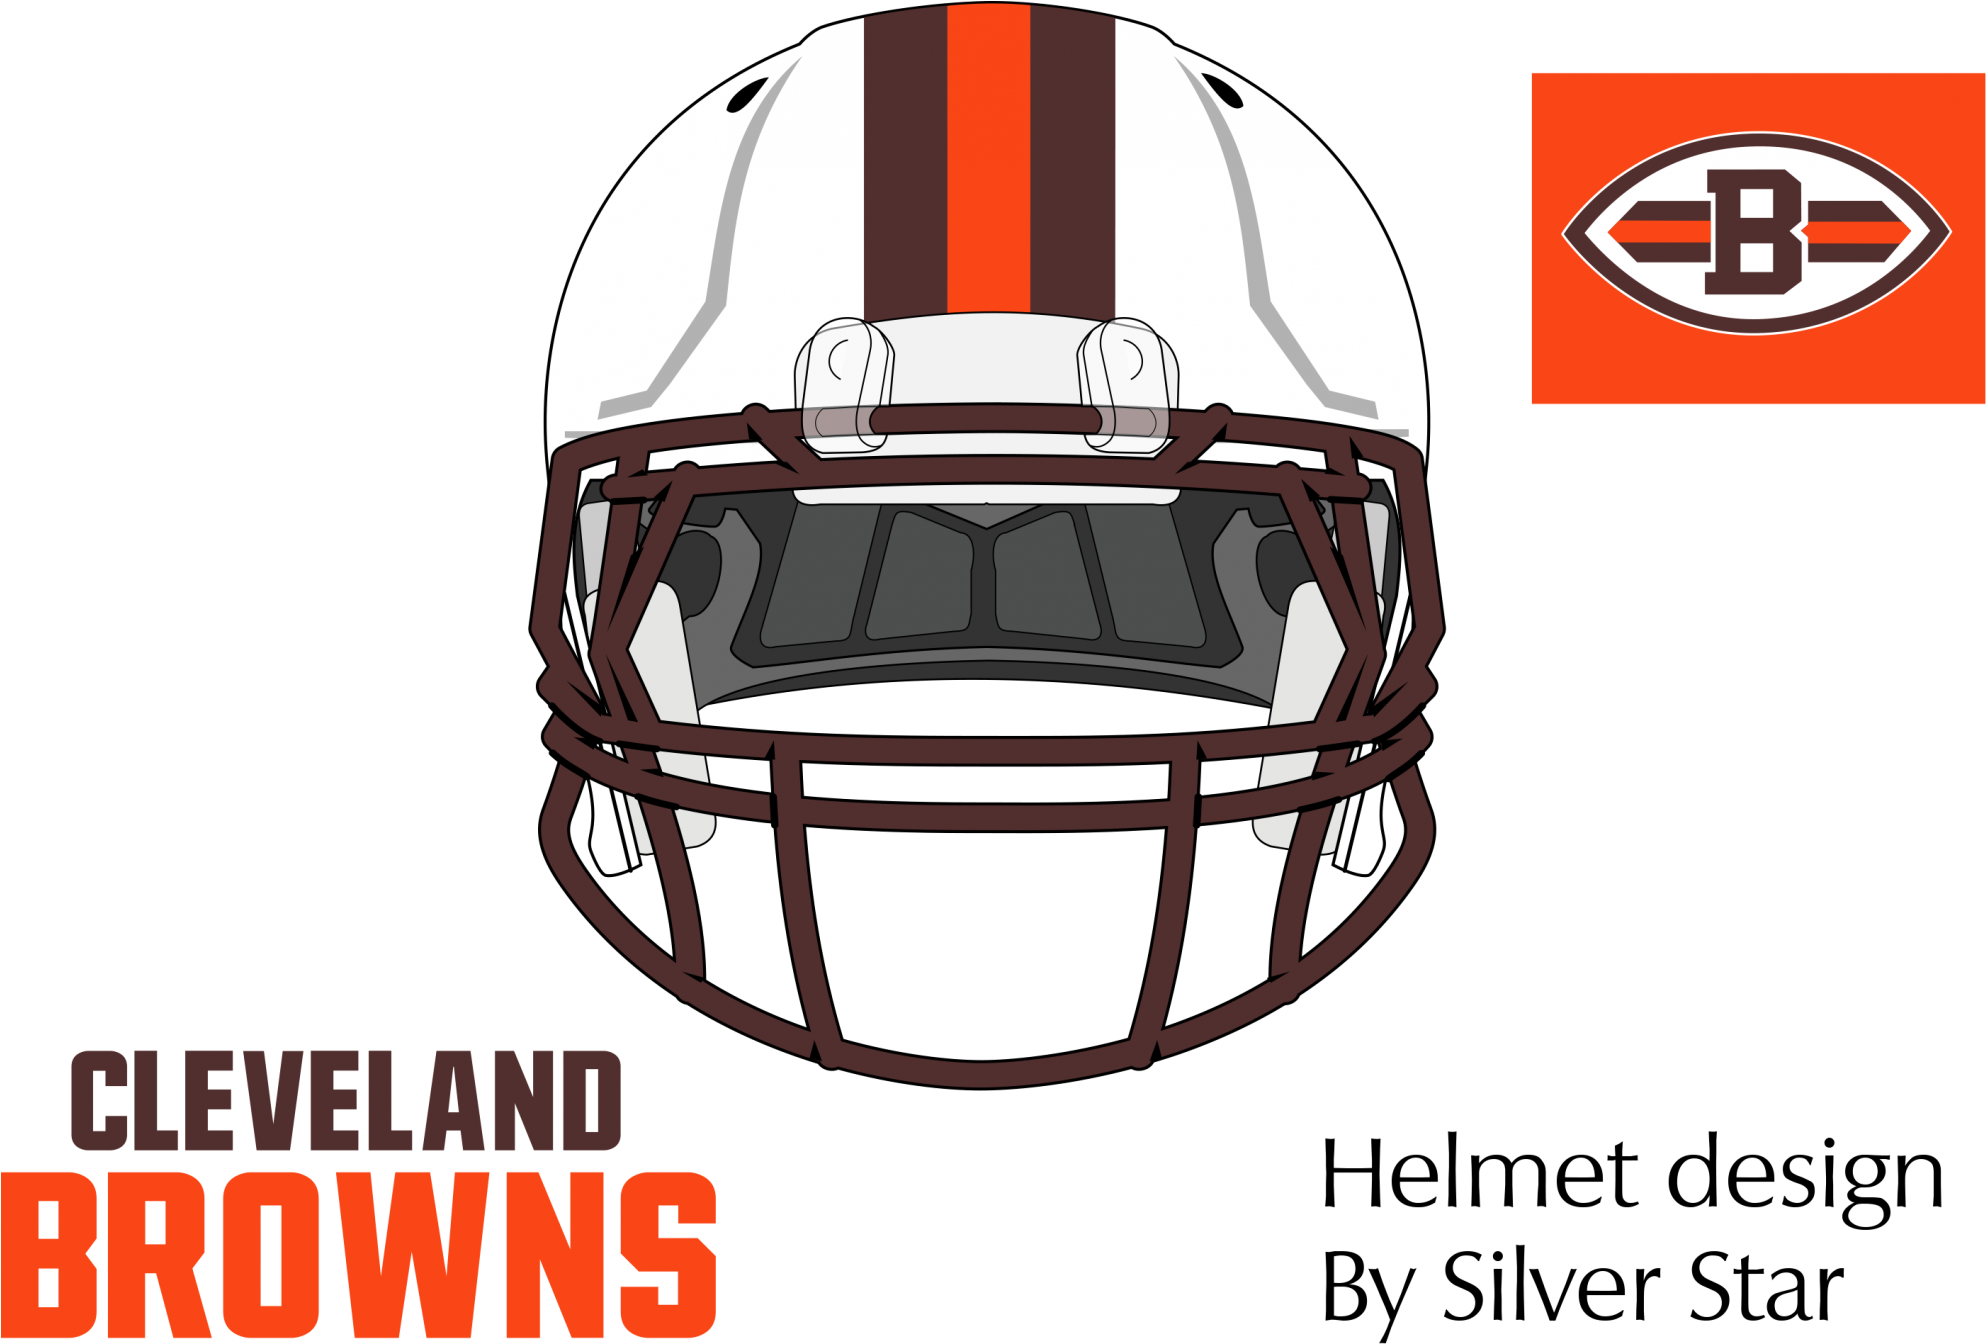 Cleveland Browns Mockup White Helmets Cleveland Browns